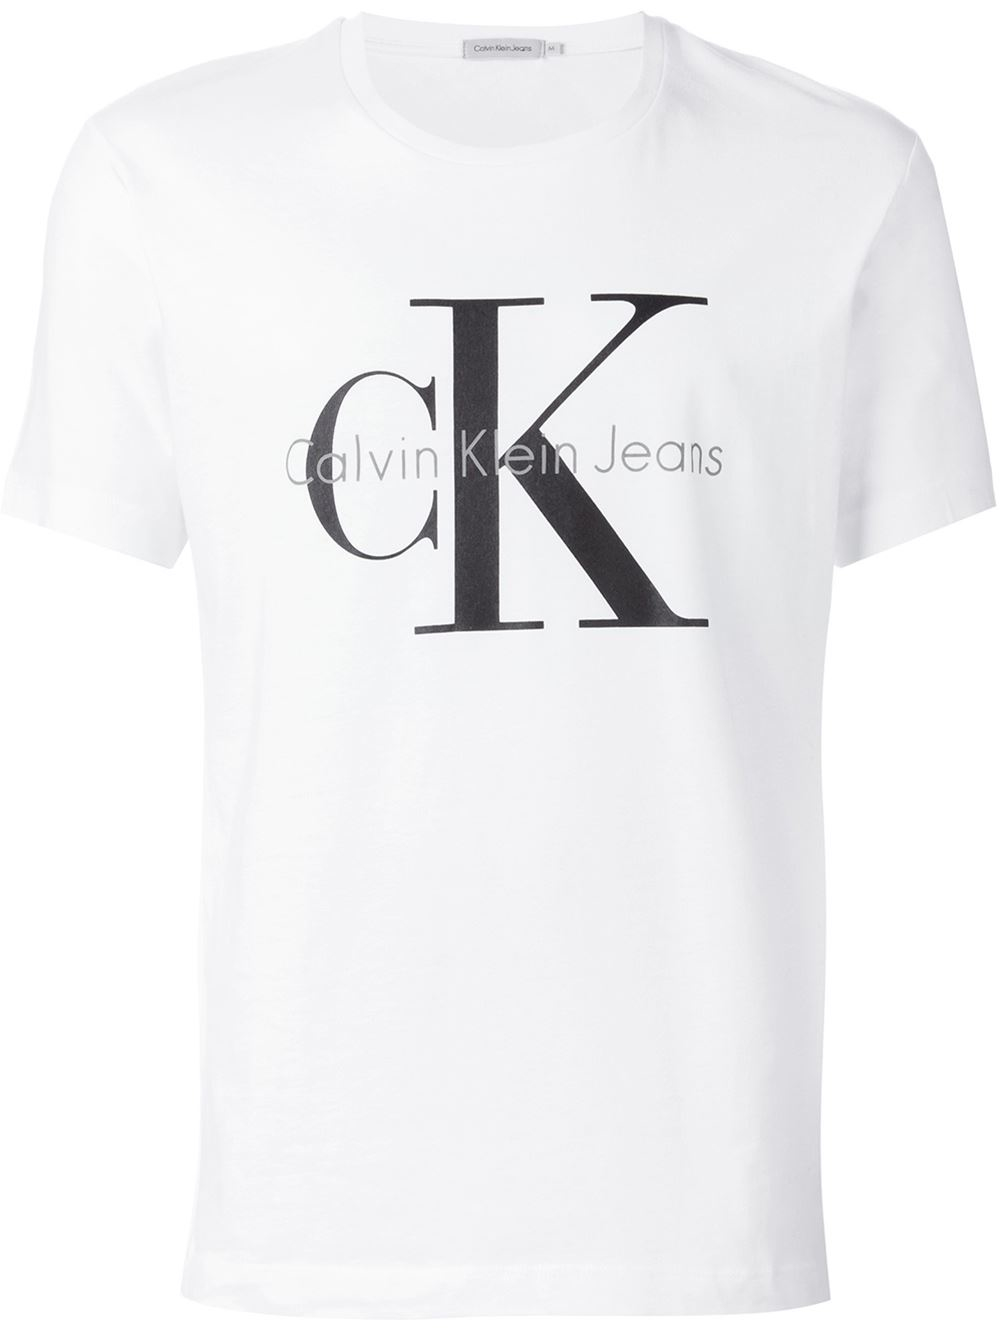 Calvin klein jeans Logo-Print Cotton T-Shirt in White for Men | Lyst